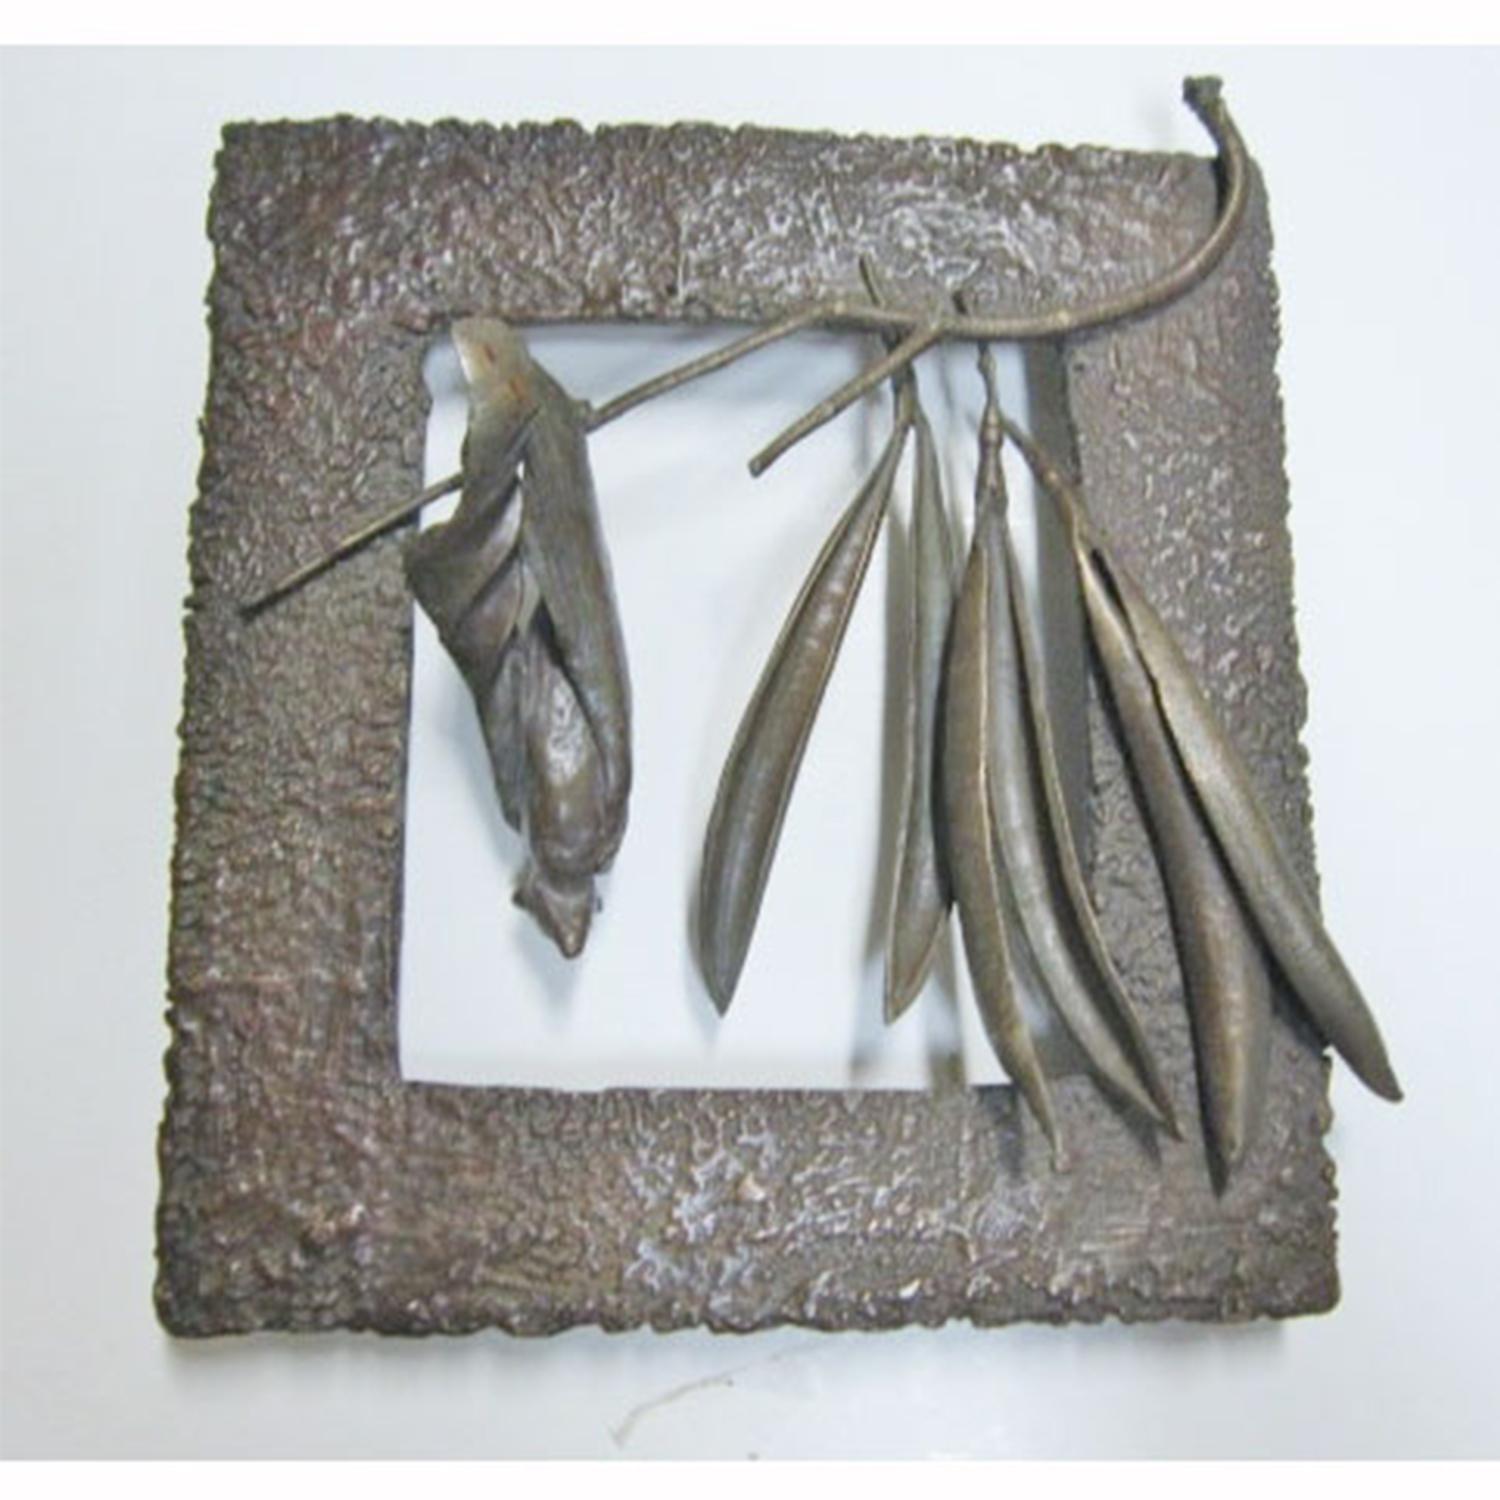 Copper Tritscheller Figurative Sculpture - Bat in Frame with Three Bean Pods